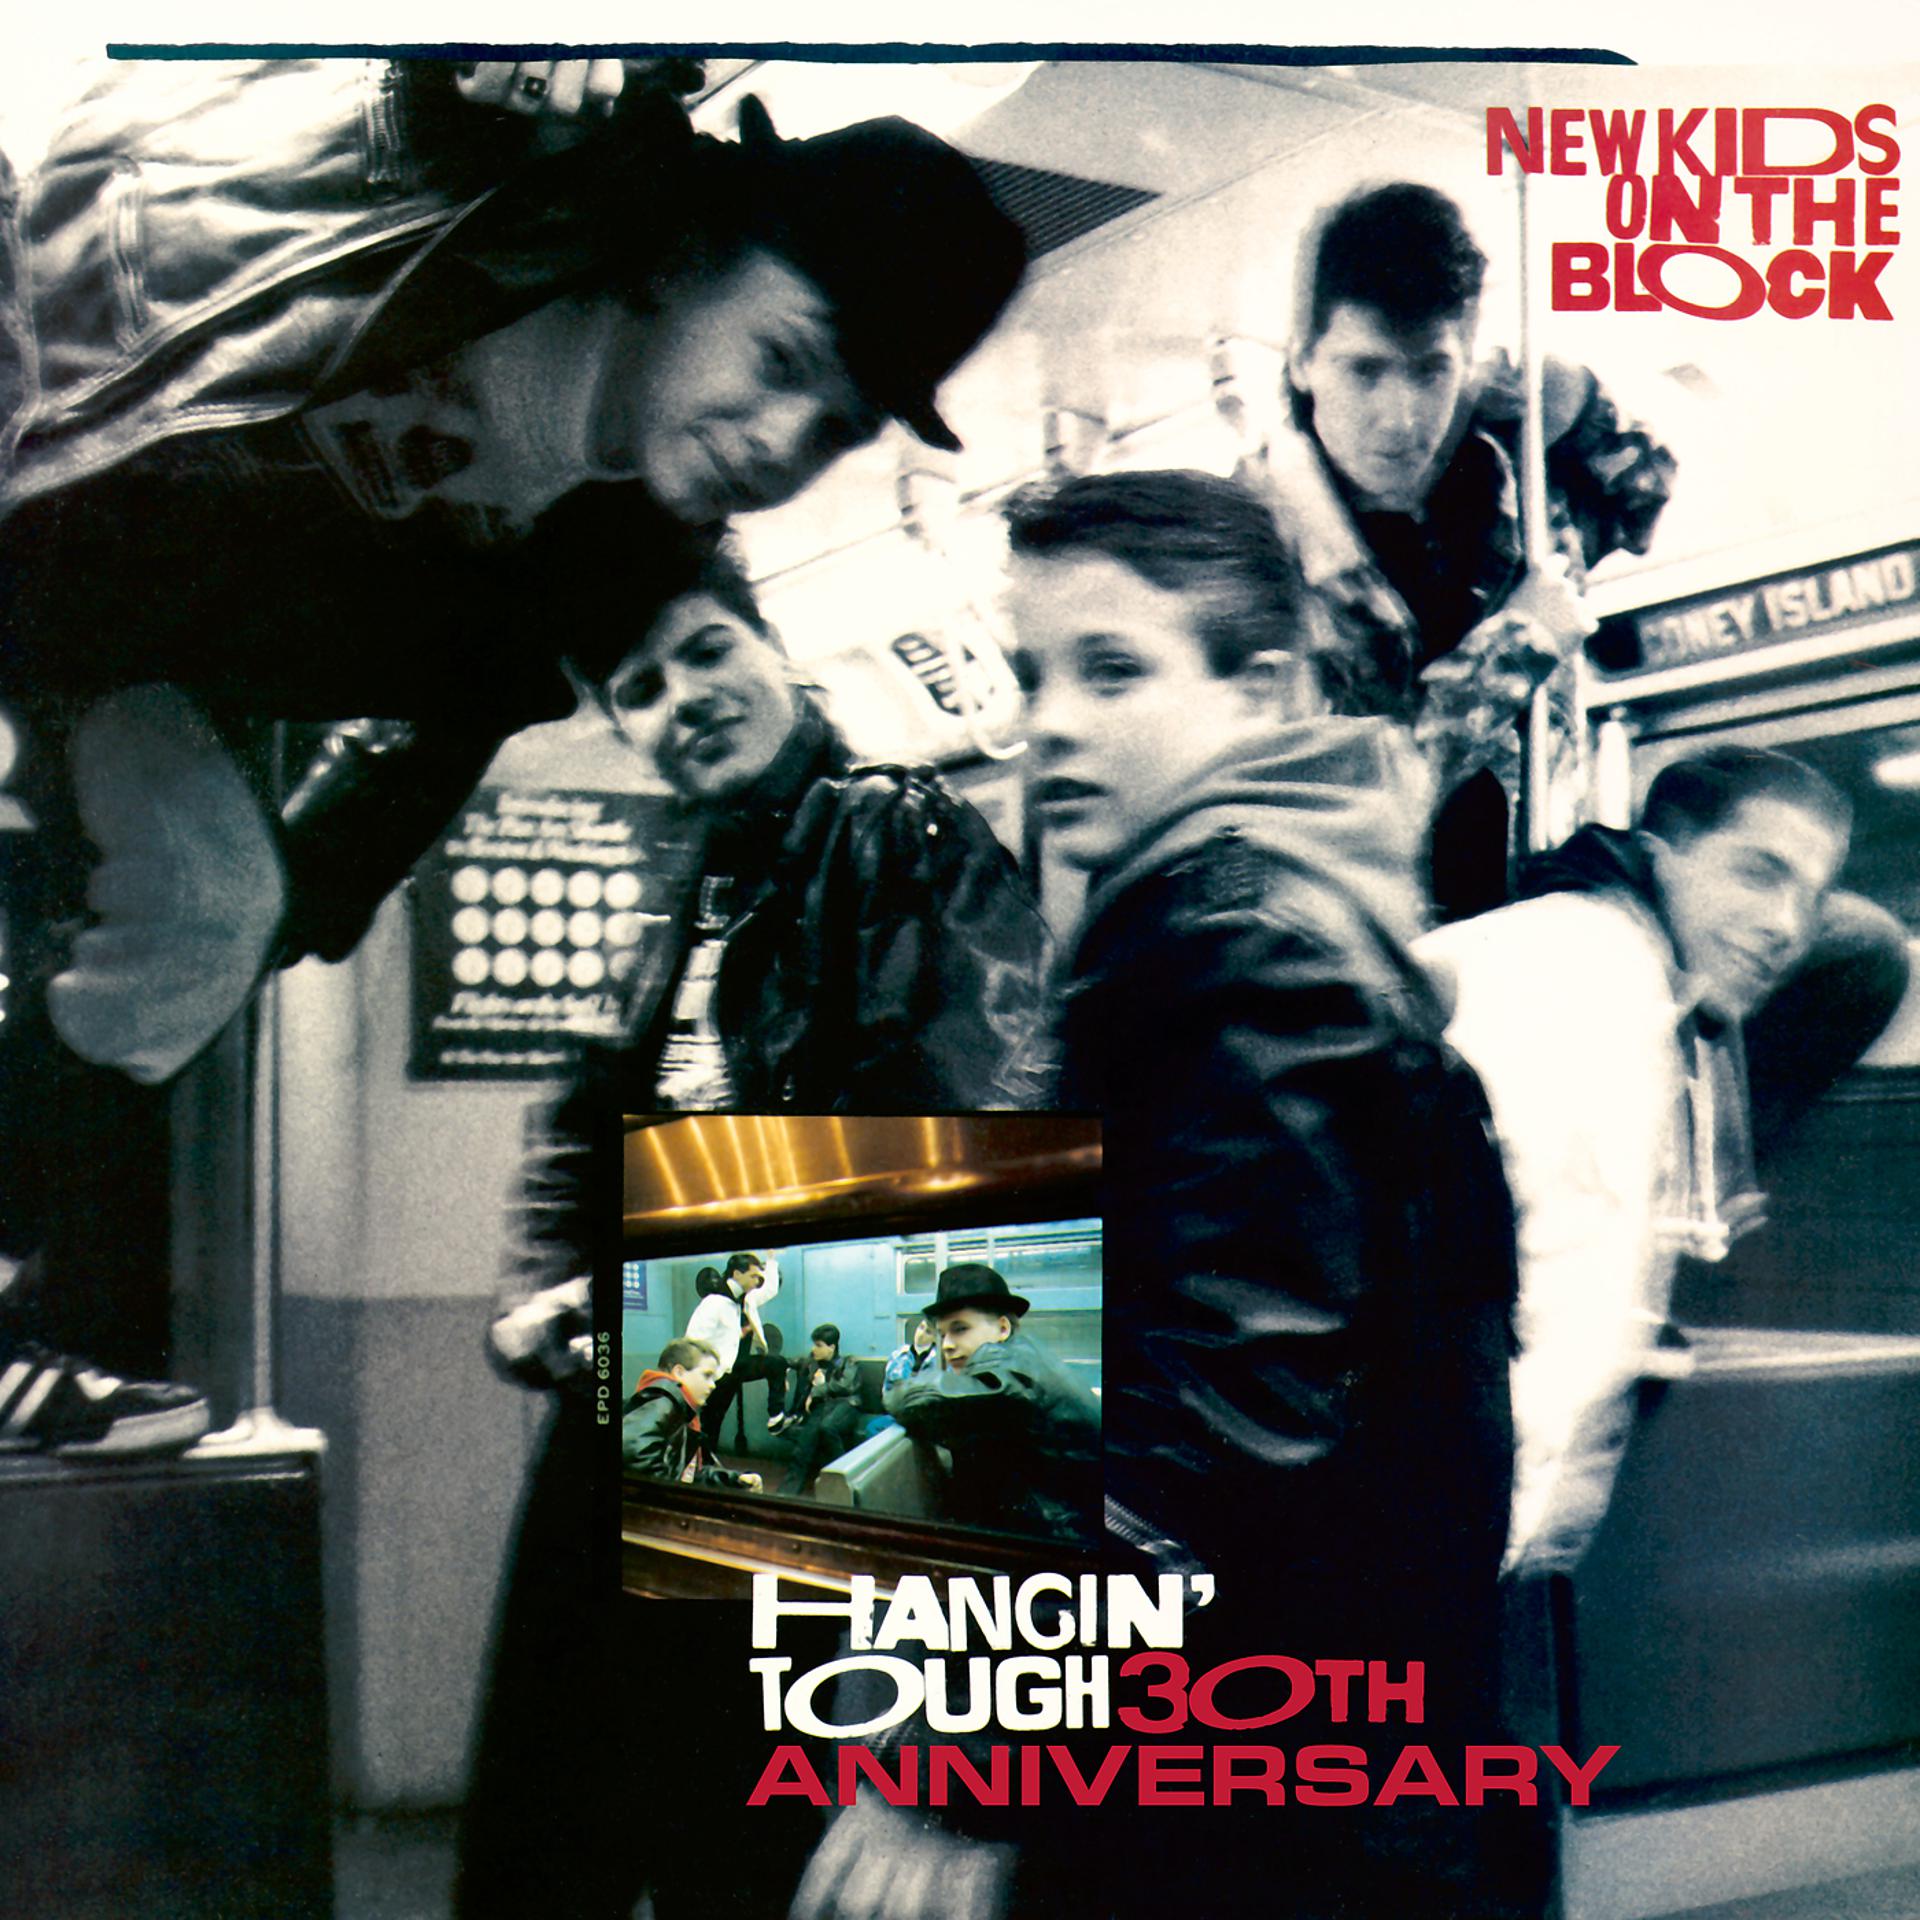 Постер к треку New Kids on the Block, Salt-N-Pepa, Naughty by Nature, Tiffany, Debbie Gibson - 80s Baby